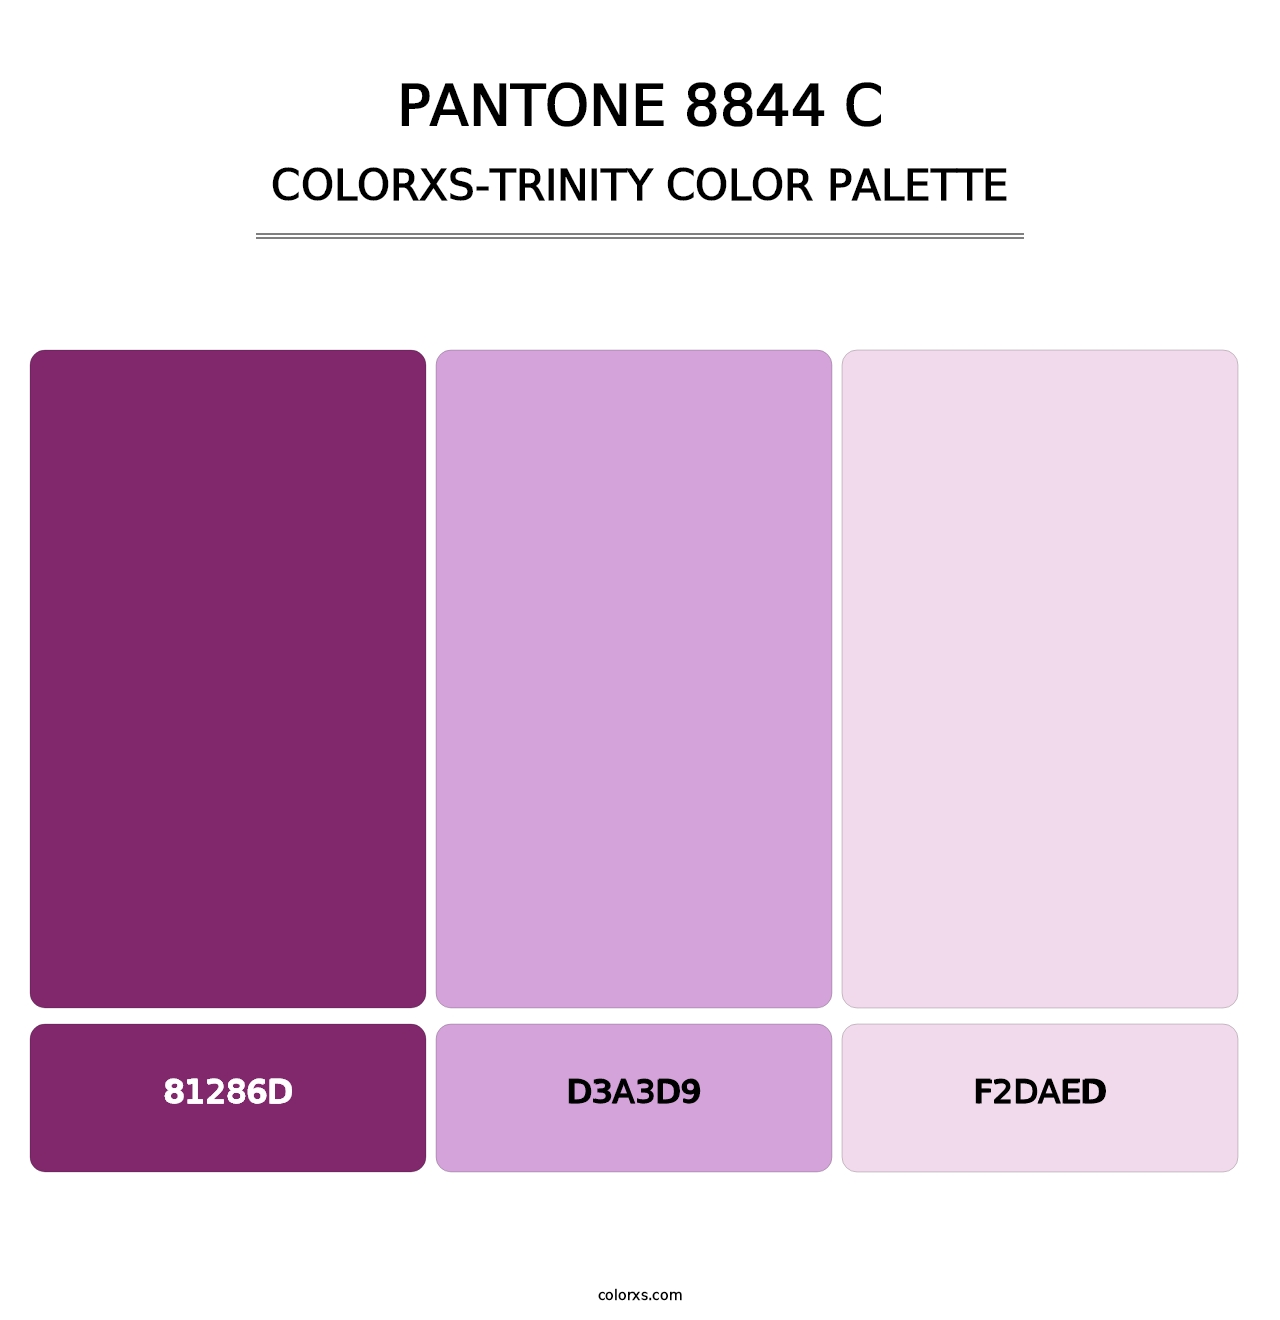 PANTONE 8844 C - Colorxs Trinity Palette